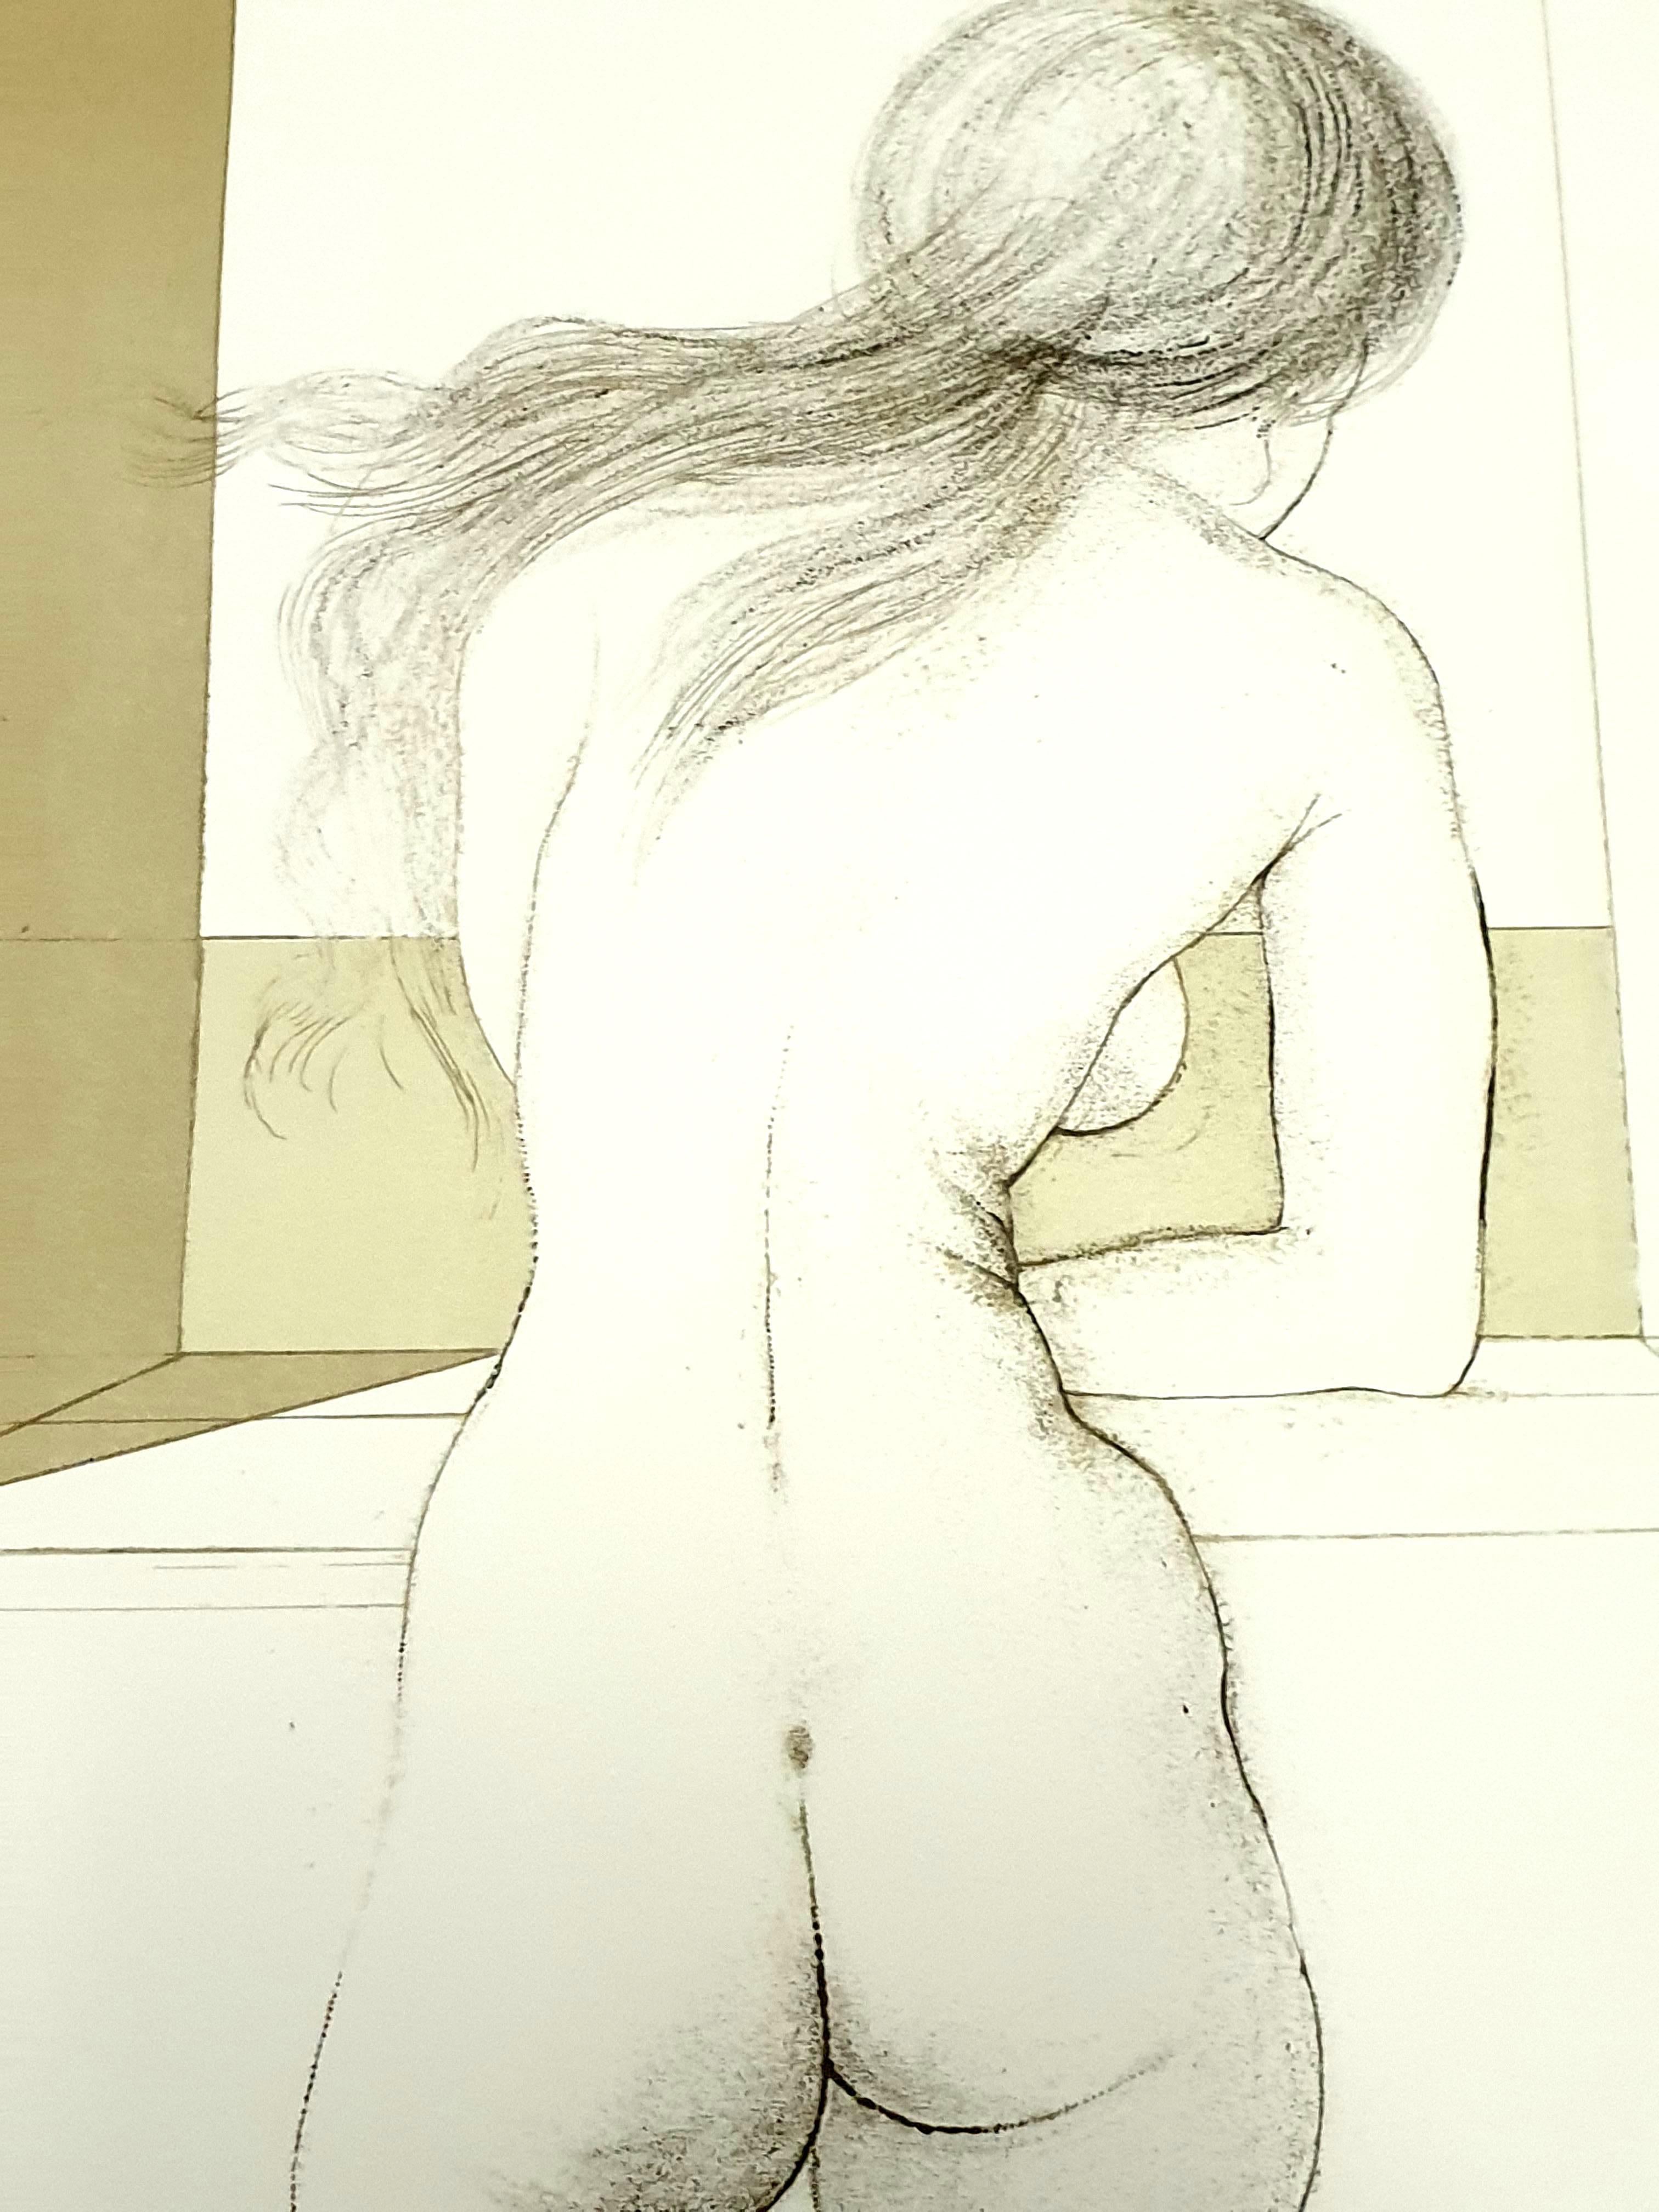 Salvador Dali - Nude at the Window - Original Handsigned Lithograph - Surrealist Print by Salvador Dalí